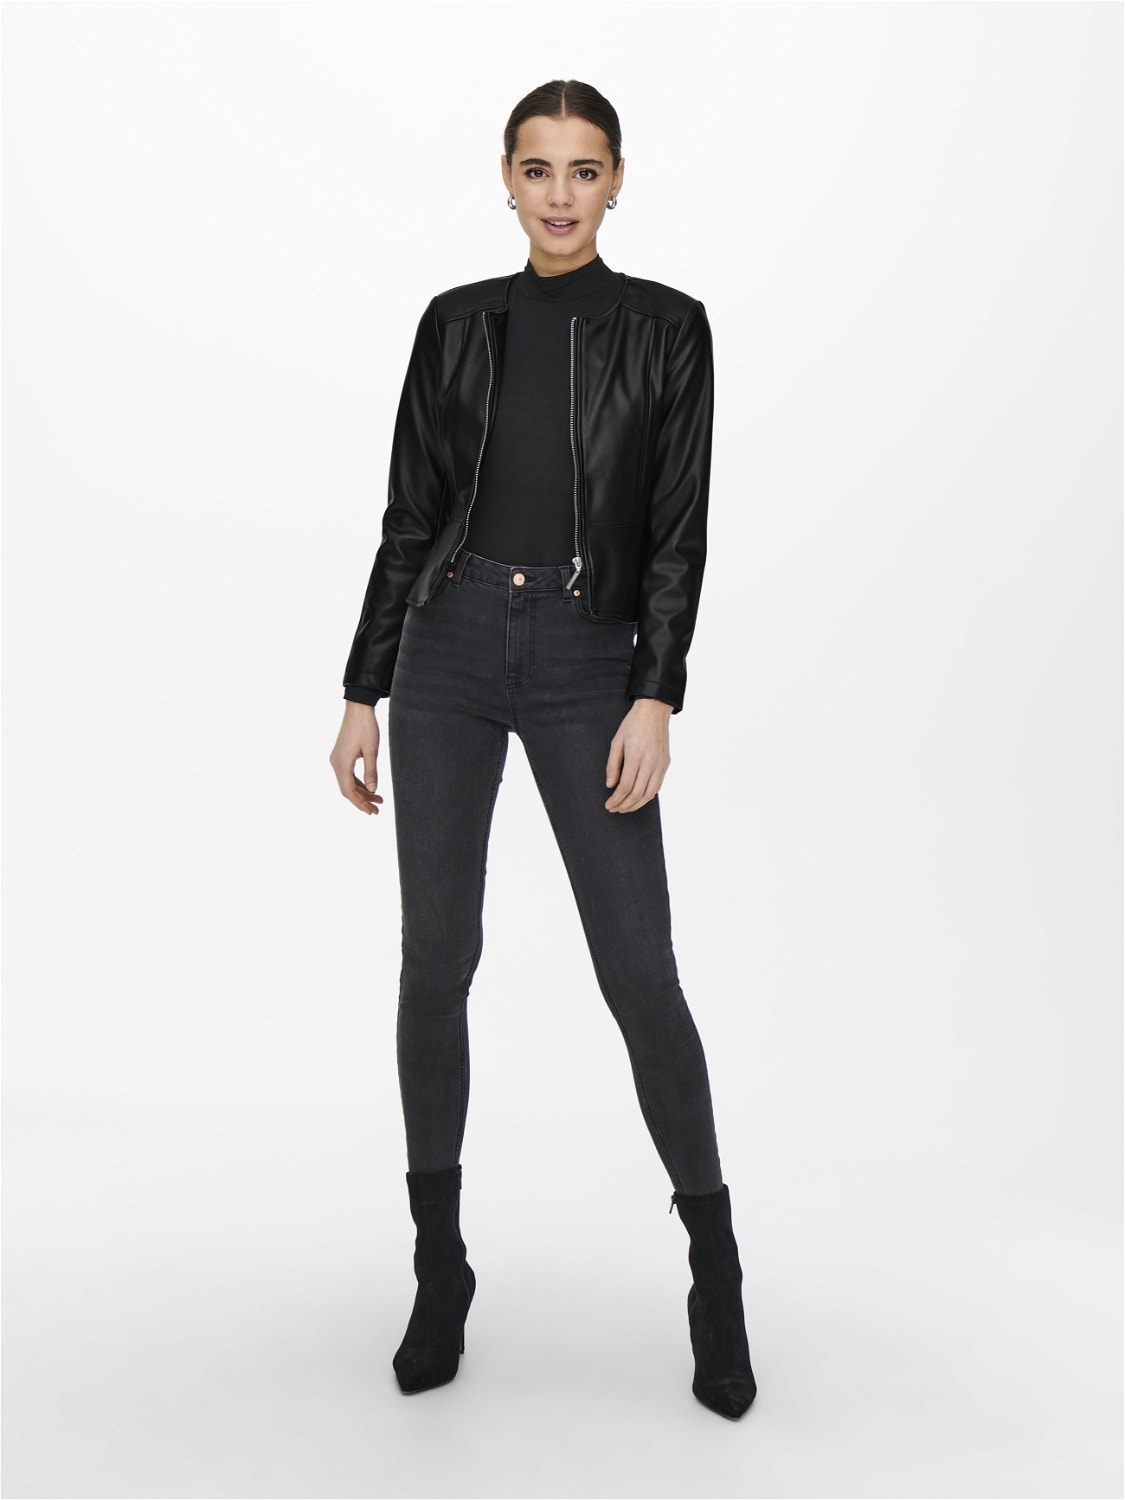 ONLY Short Leather Jacket -Black - 15242271